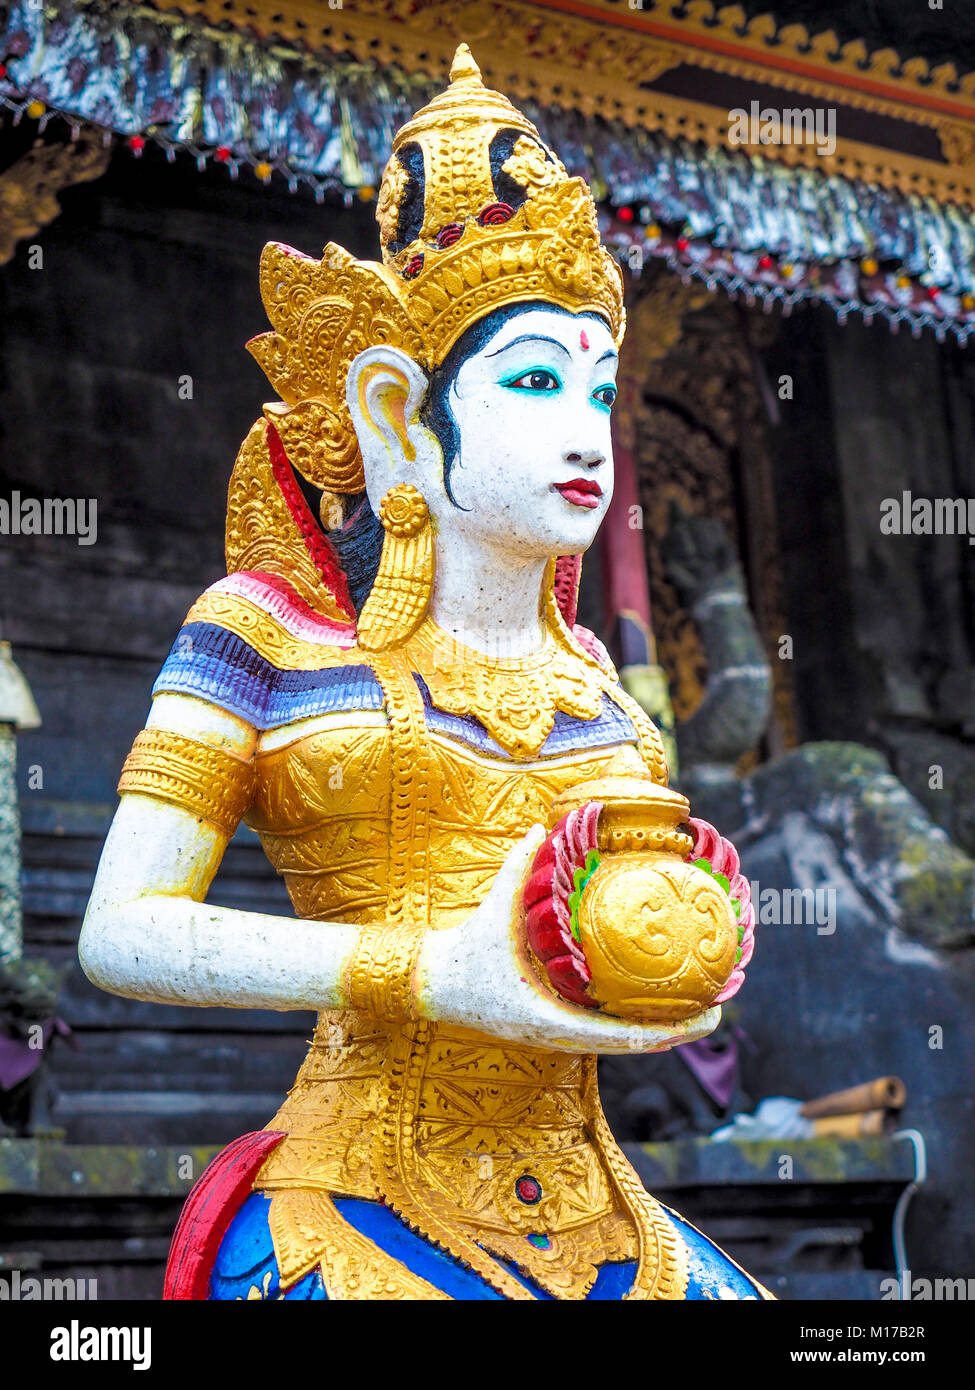 Bunte hinduistische Göttin figurine in Pura Ulun Danu Batur Tempel auf Bali Stockfoto